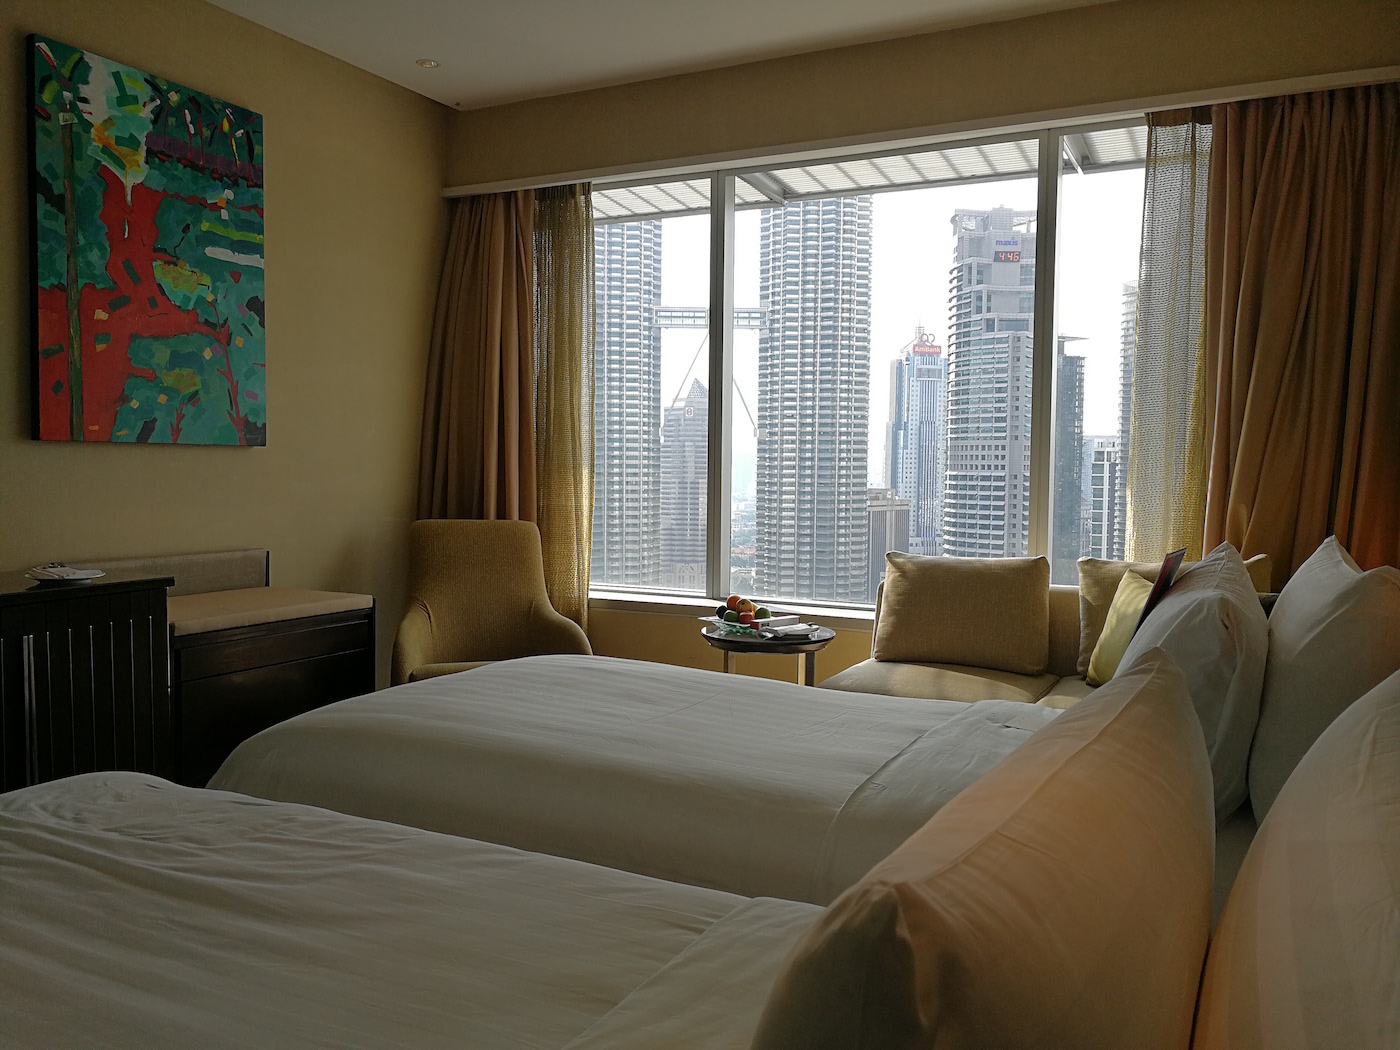 Traders Hotel Kuala Lumpur Club Room with view of the Petronas Twin Towers